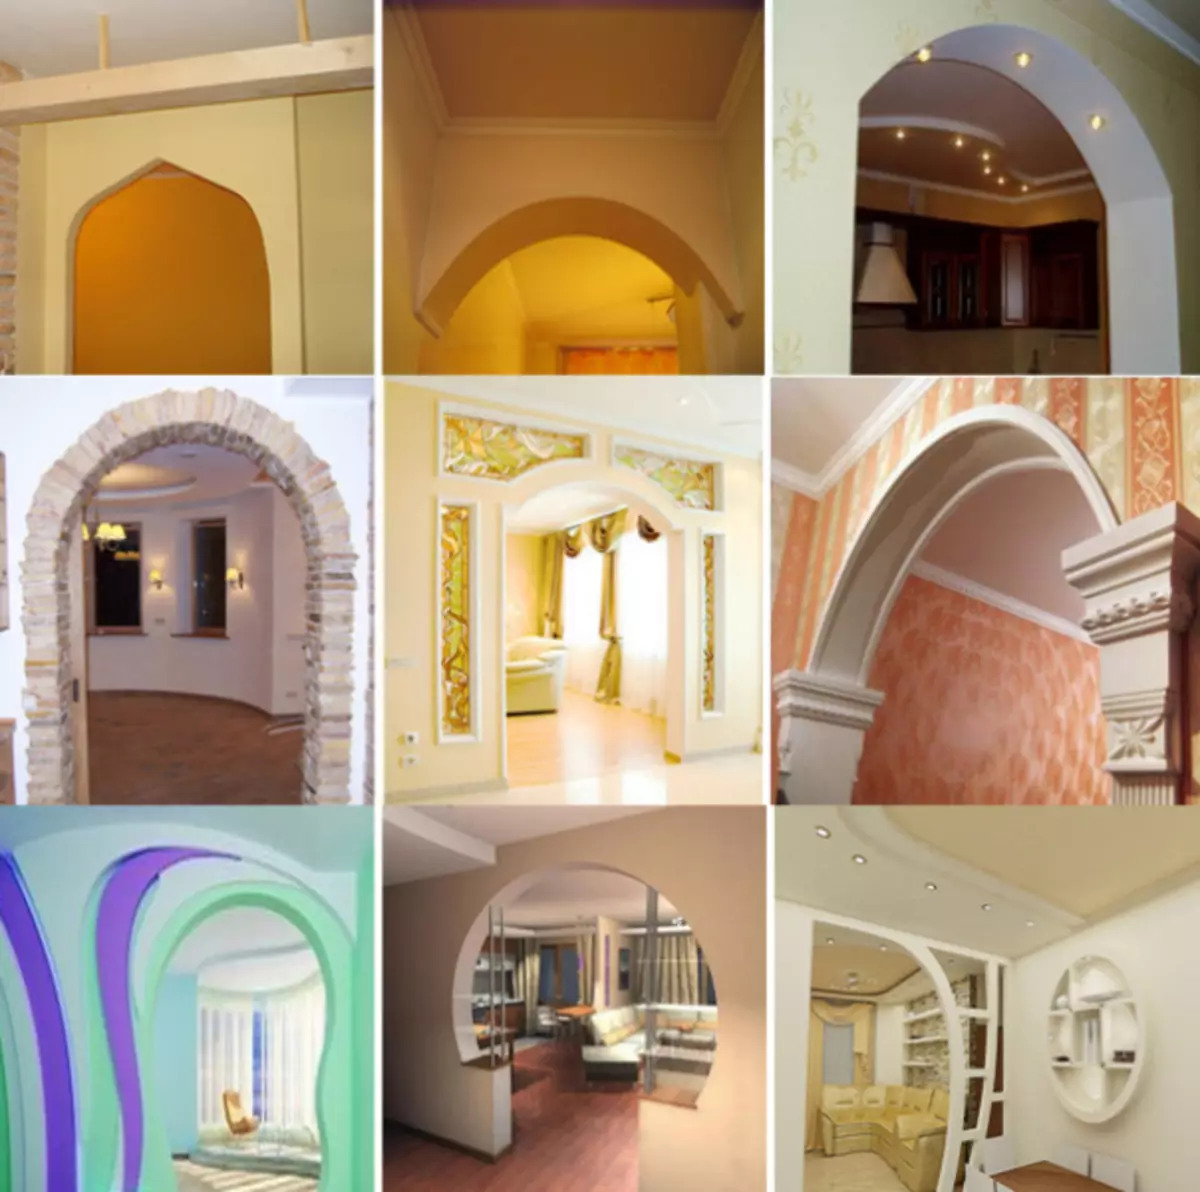 Tipos de arcos de porta: clássico e exclusivo (foto)